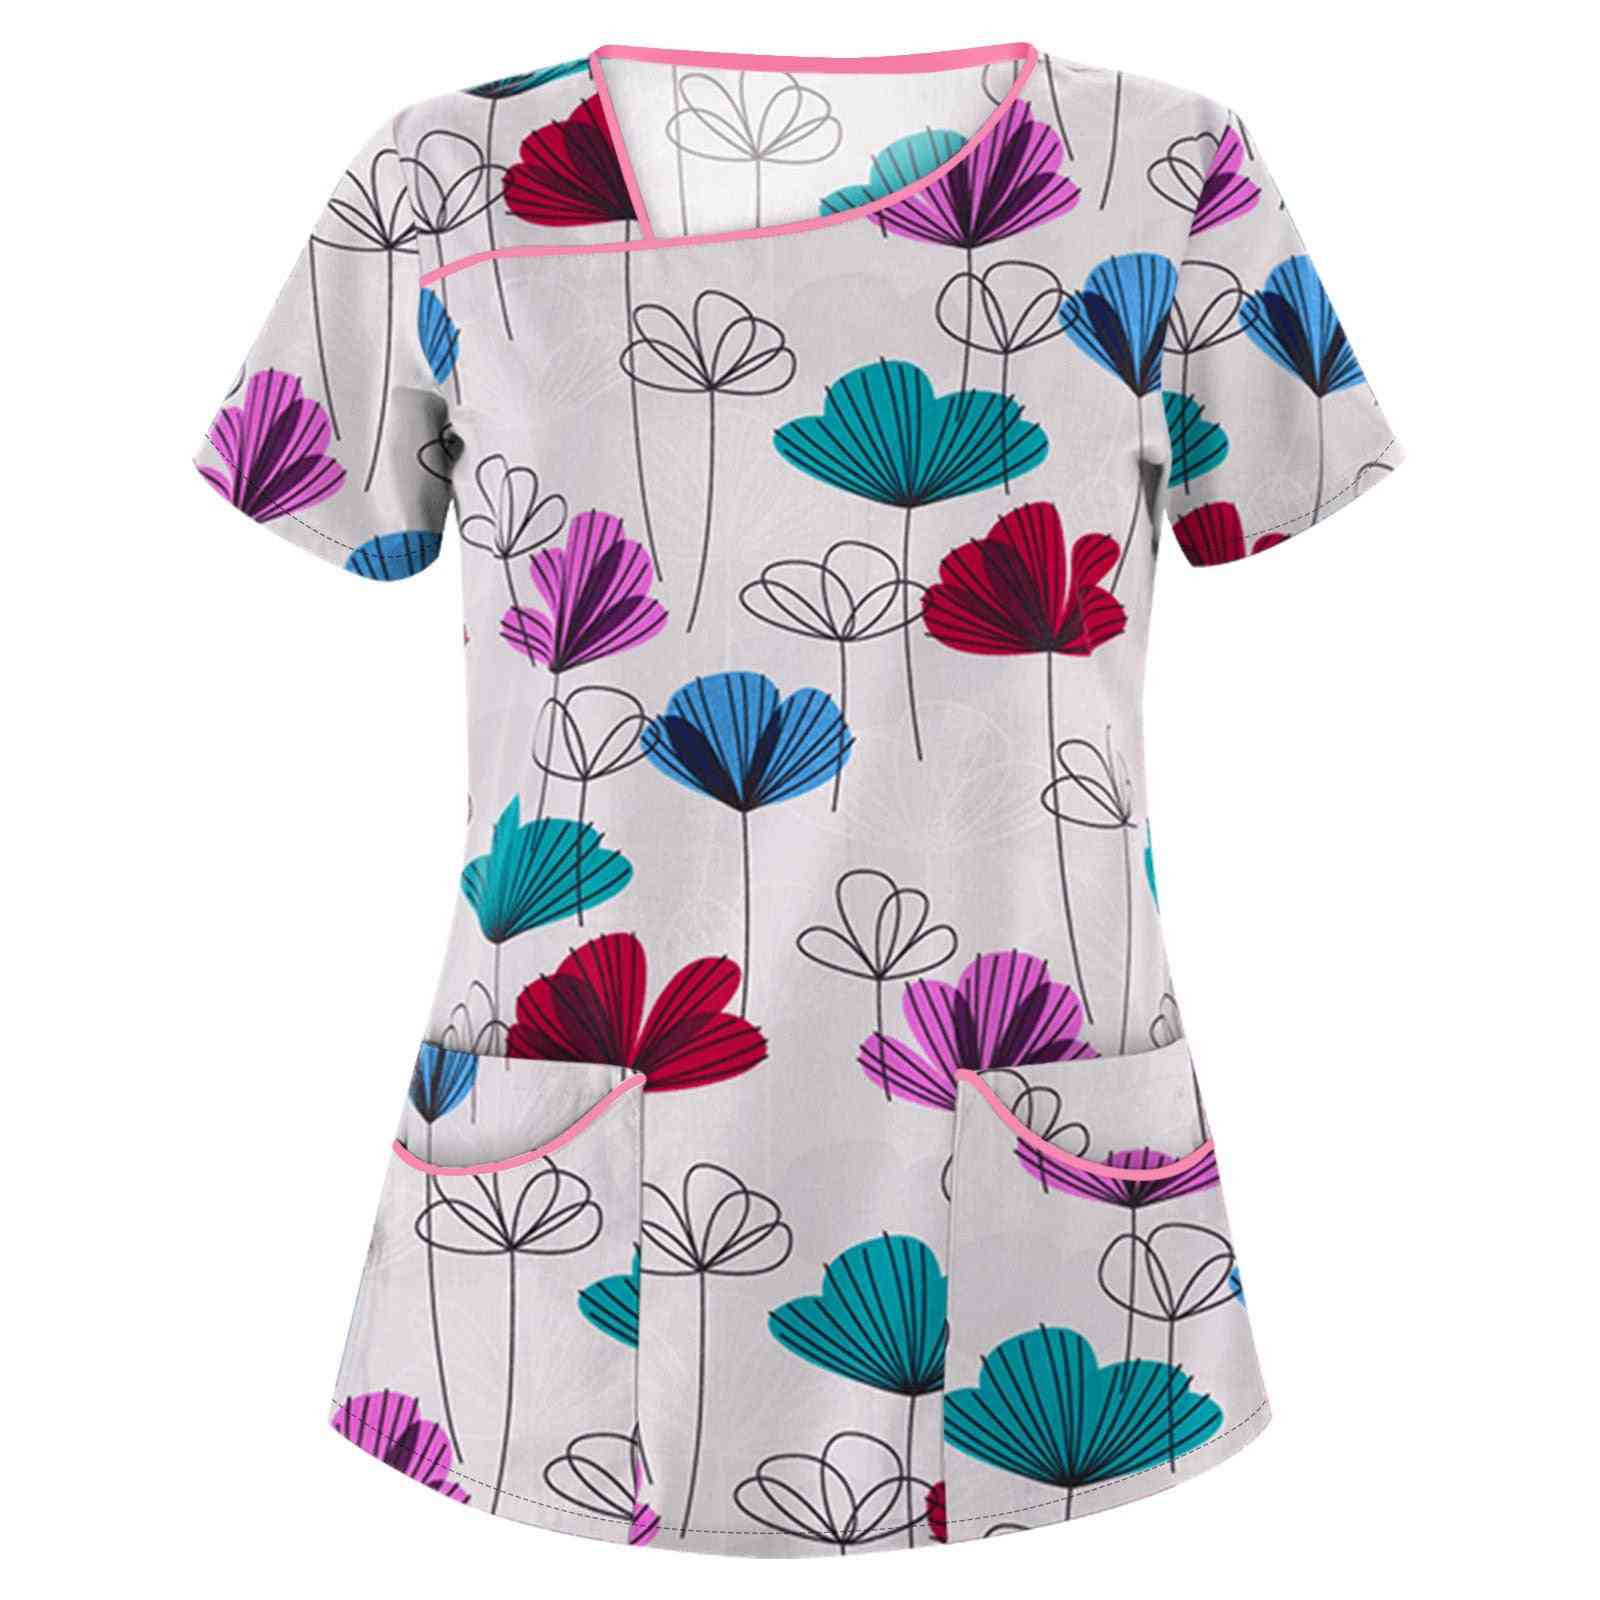 Flower Print- Short Sleeve, Nursing Blouse, Scrubs Tops Shirts